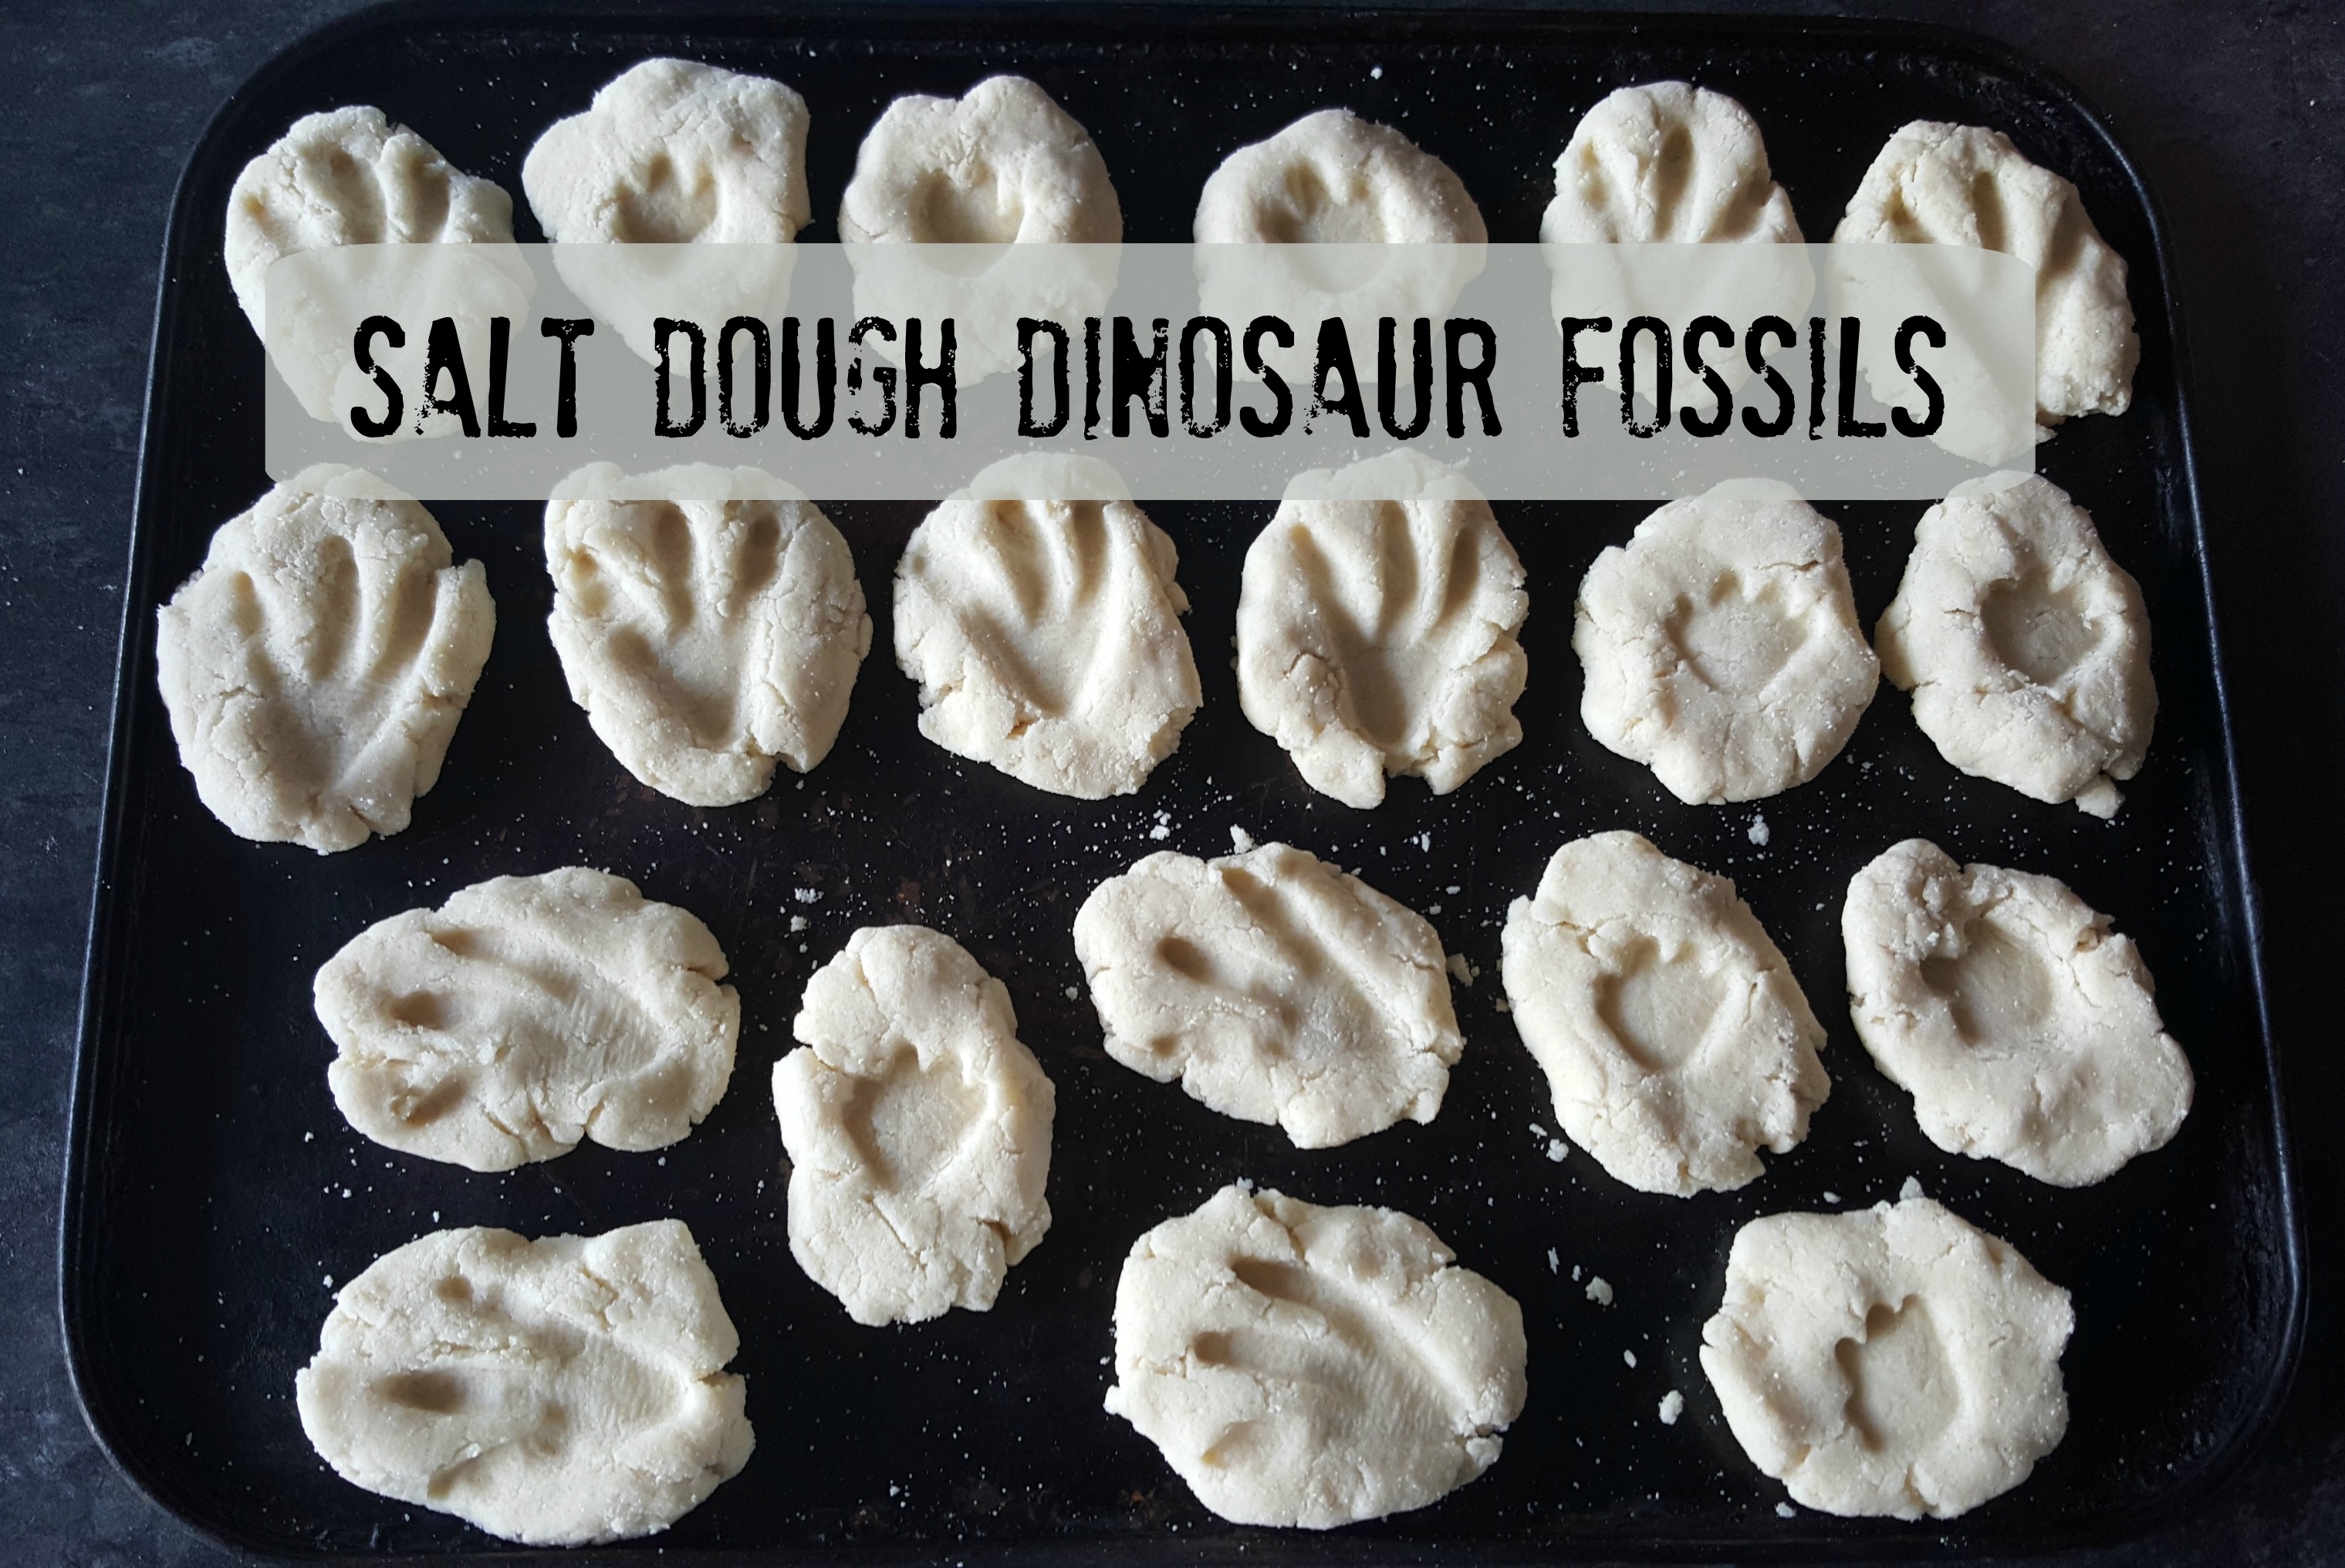 Salt dough dinosaur fossils